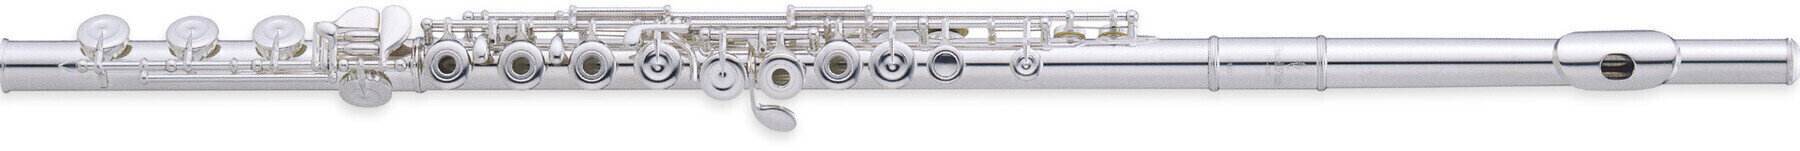 Concert flute Pearl Flute F505RE Concert flute